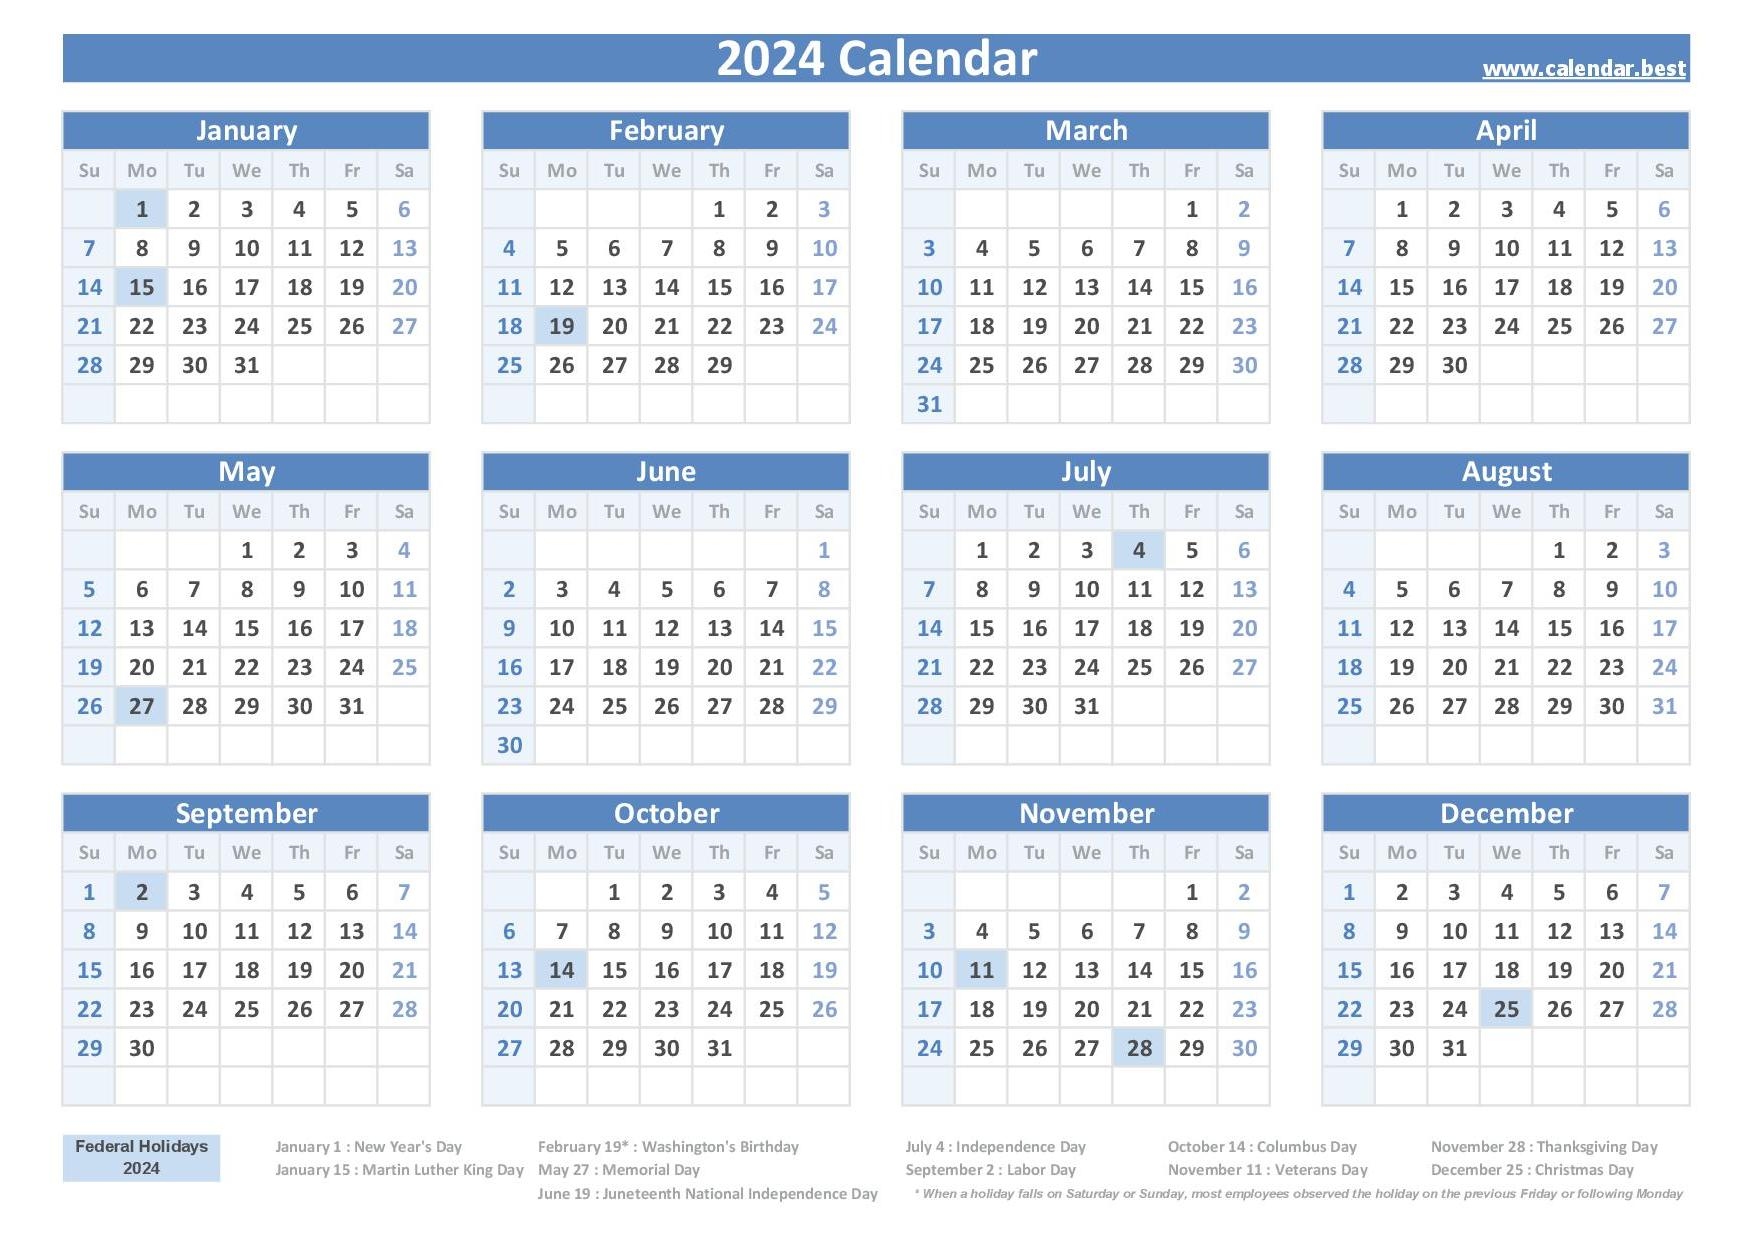 2024 Us Federal Holiday Calendar Printable Bill Marjie - Free Printable 2024 Calendar With Holidays Wincalendar